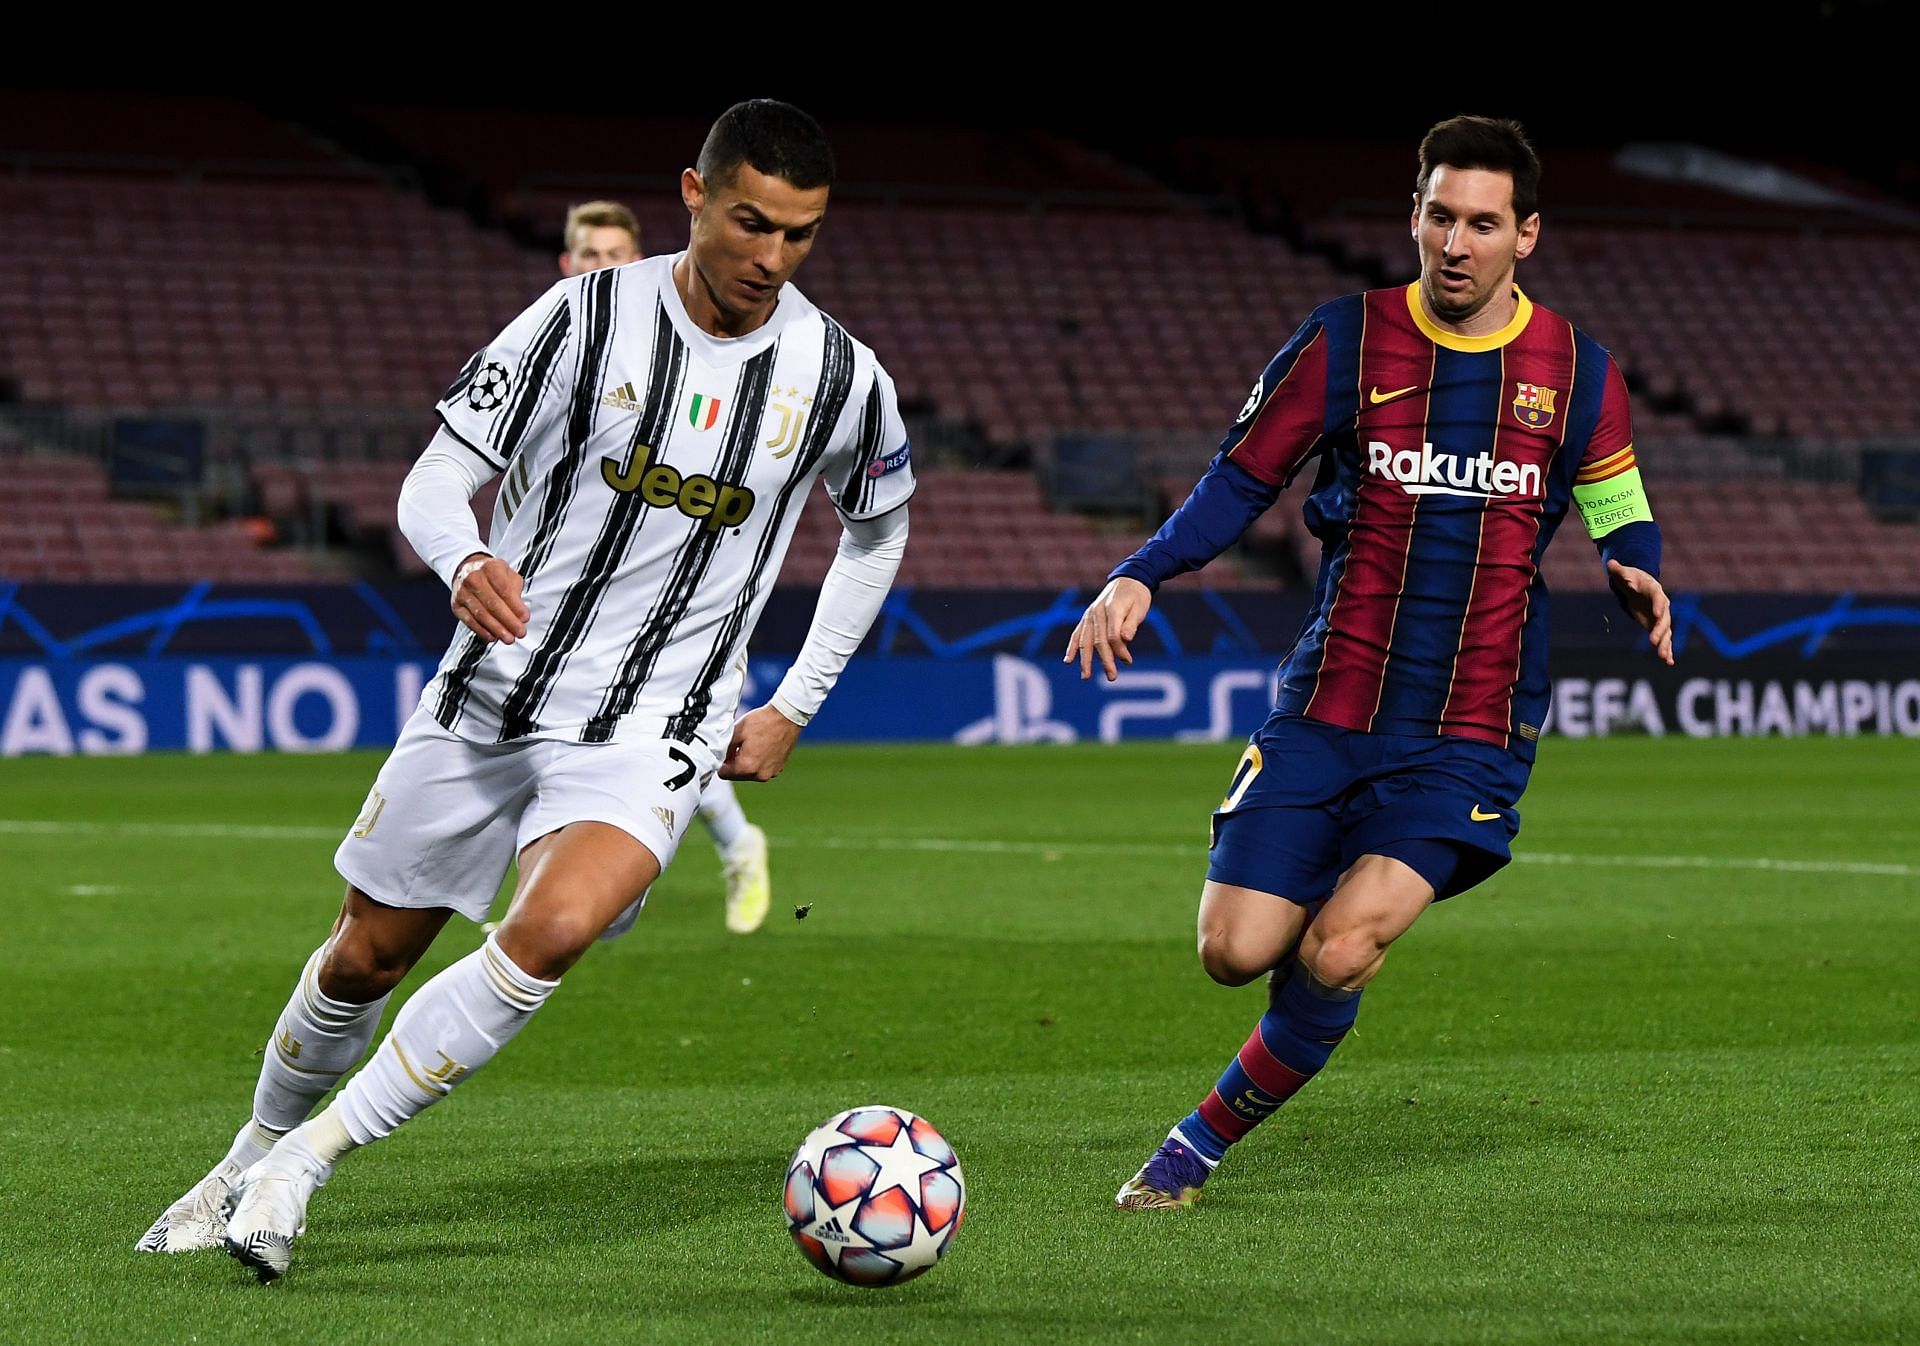 Messi versus Ronaldo: who is the true GOAT?